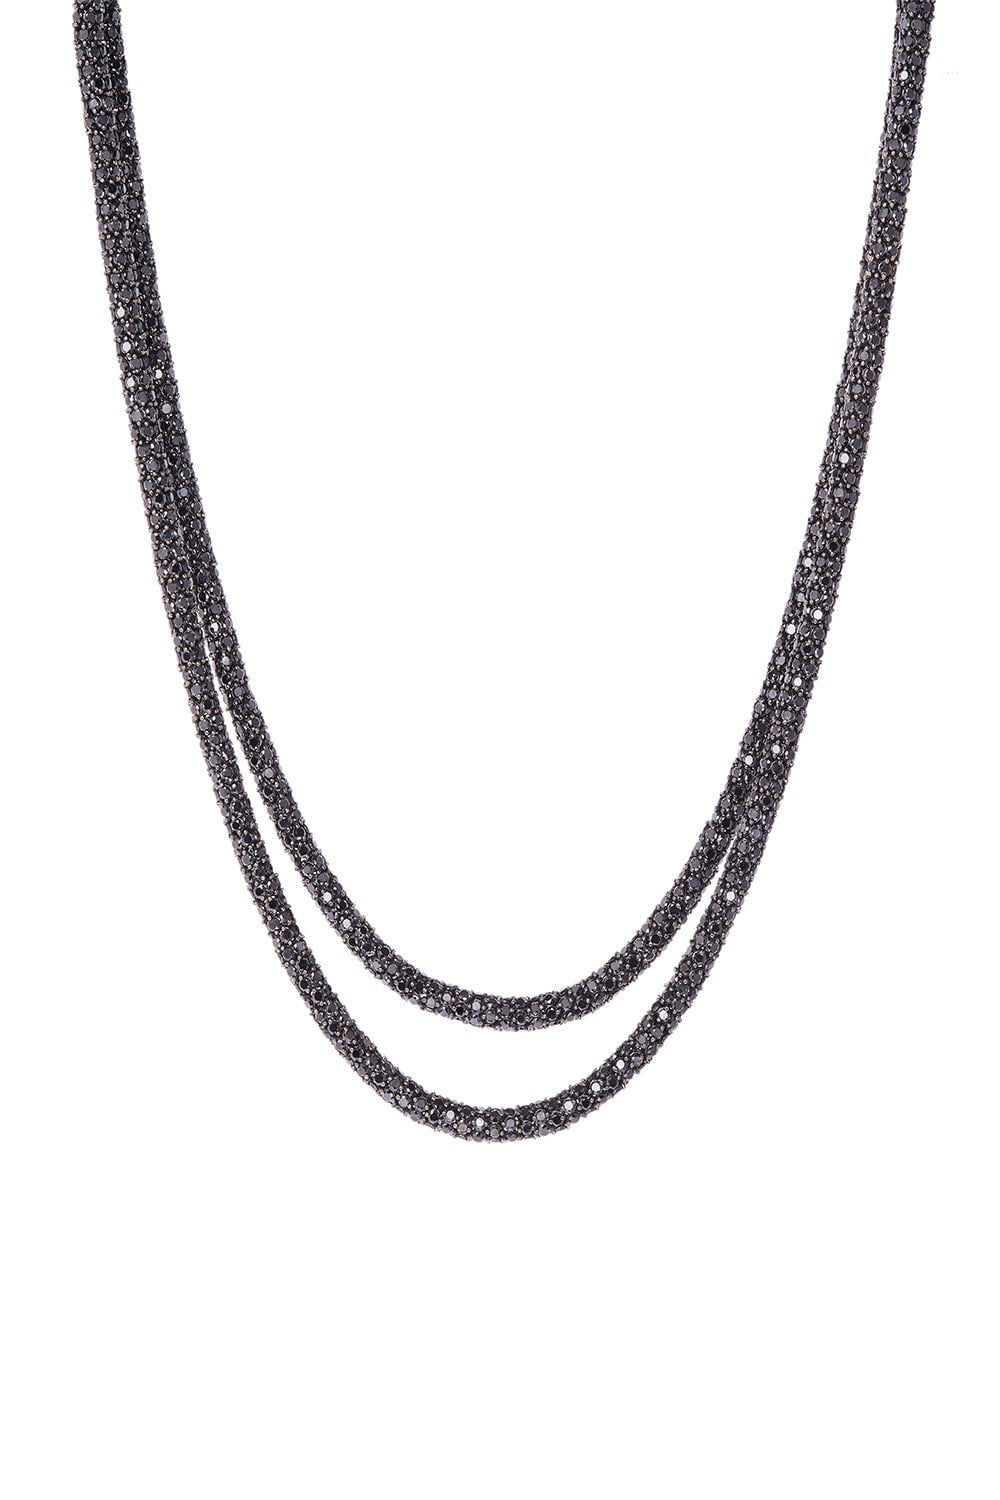 SIDNEY GARBER-Black Diamond Rope Necklace-BLACK GOLD